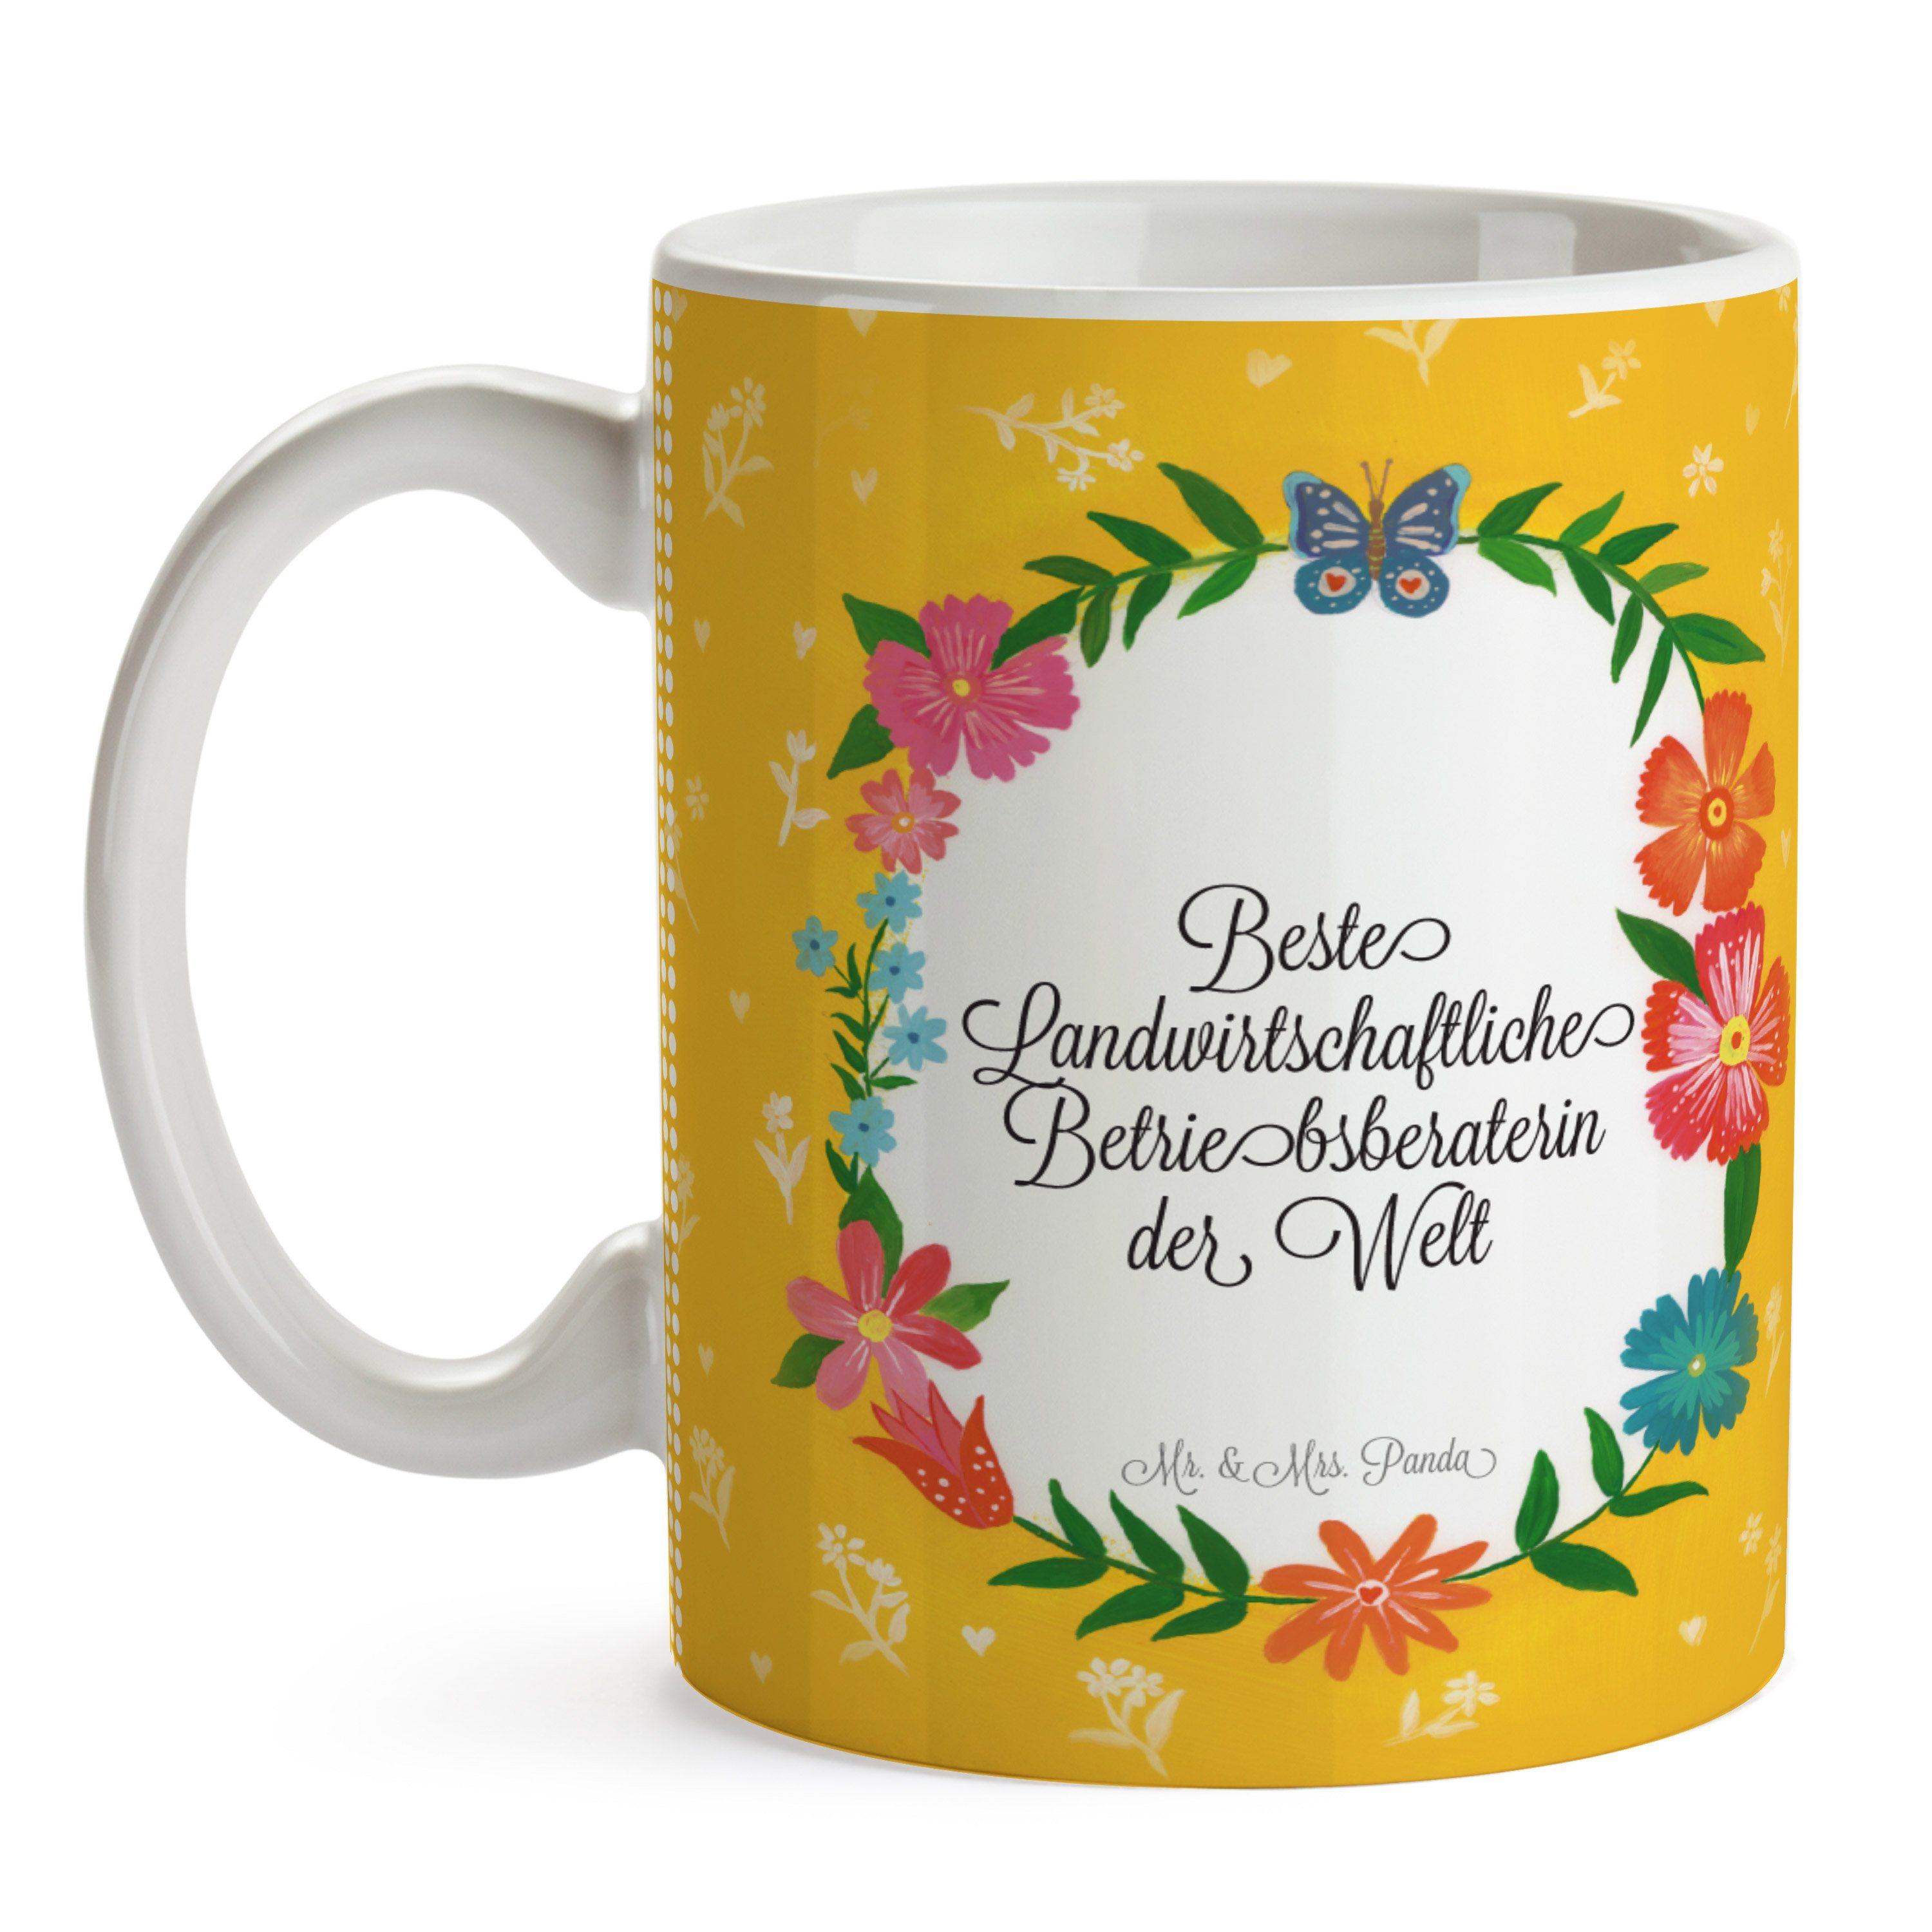 Mr. & Mrs. Panda Landwirtschaftliche Kaffeebe, - Betriebsberaterin Abschluss, Tasse Keramik Geschenk